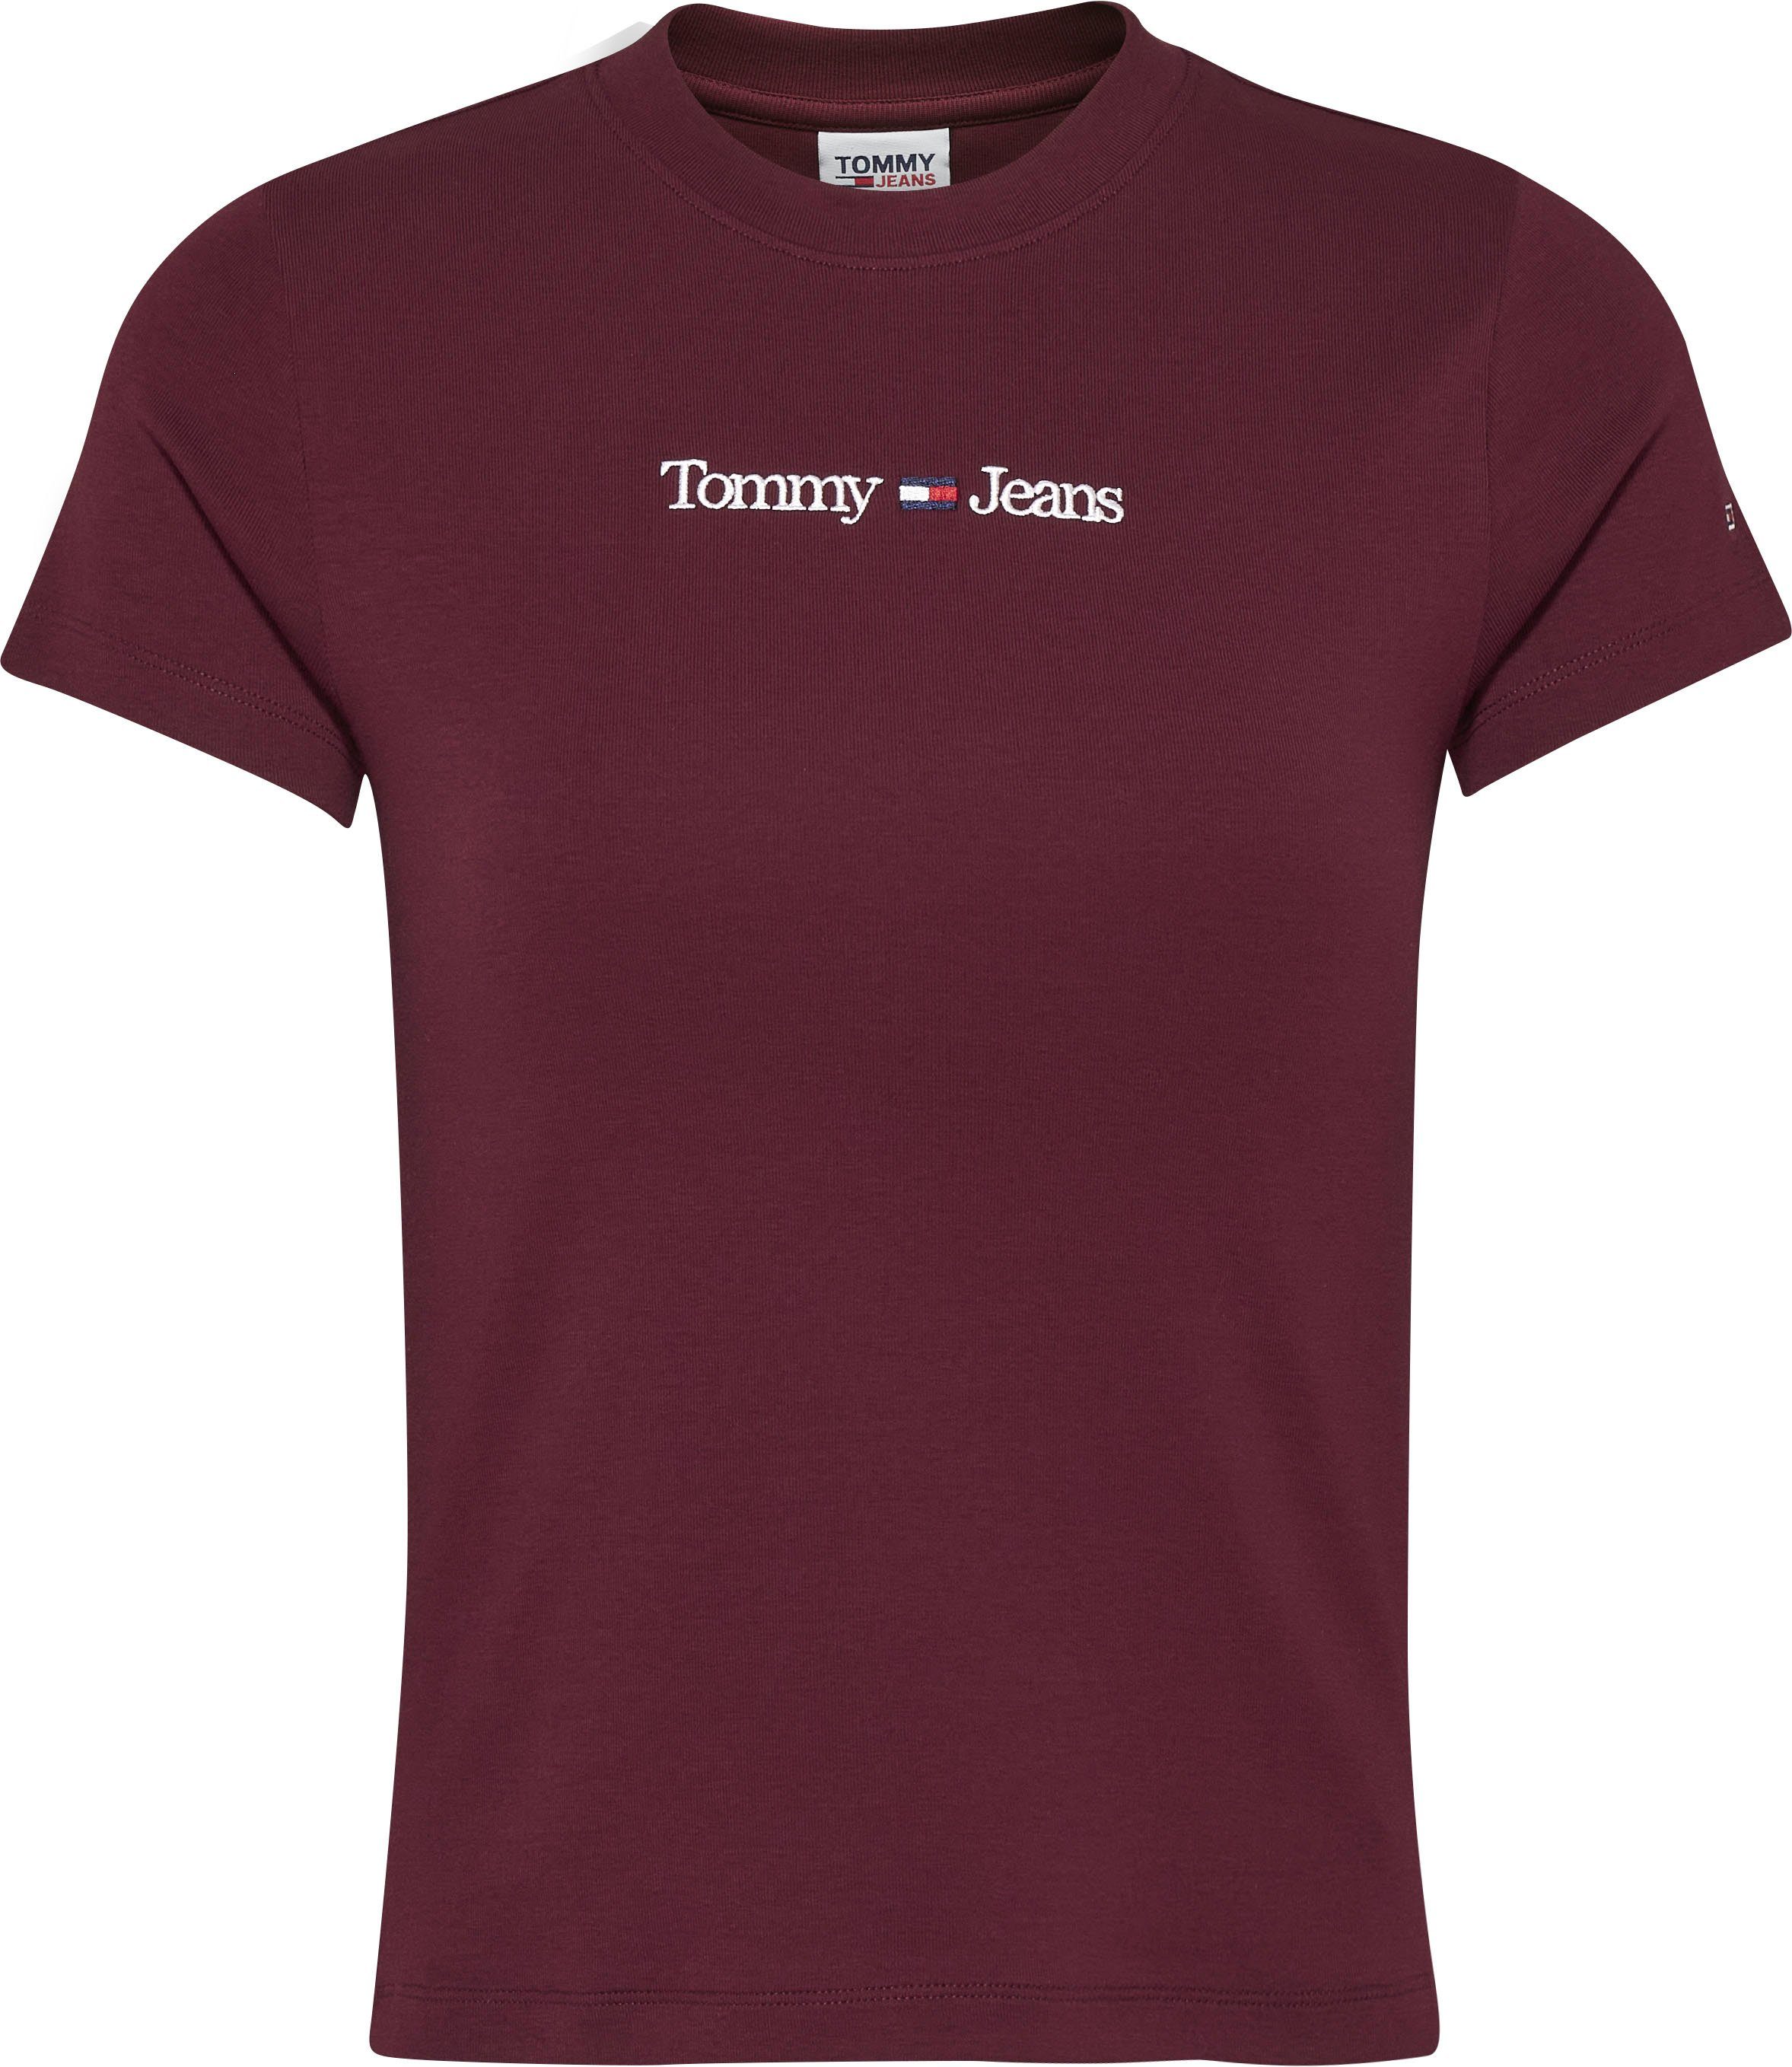 Kurzarmshirt TJW dunkelrot dezenten Tommy SS BABY Jeans mit LINEAR Tommy Jeans SERIF Stickereien